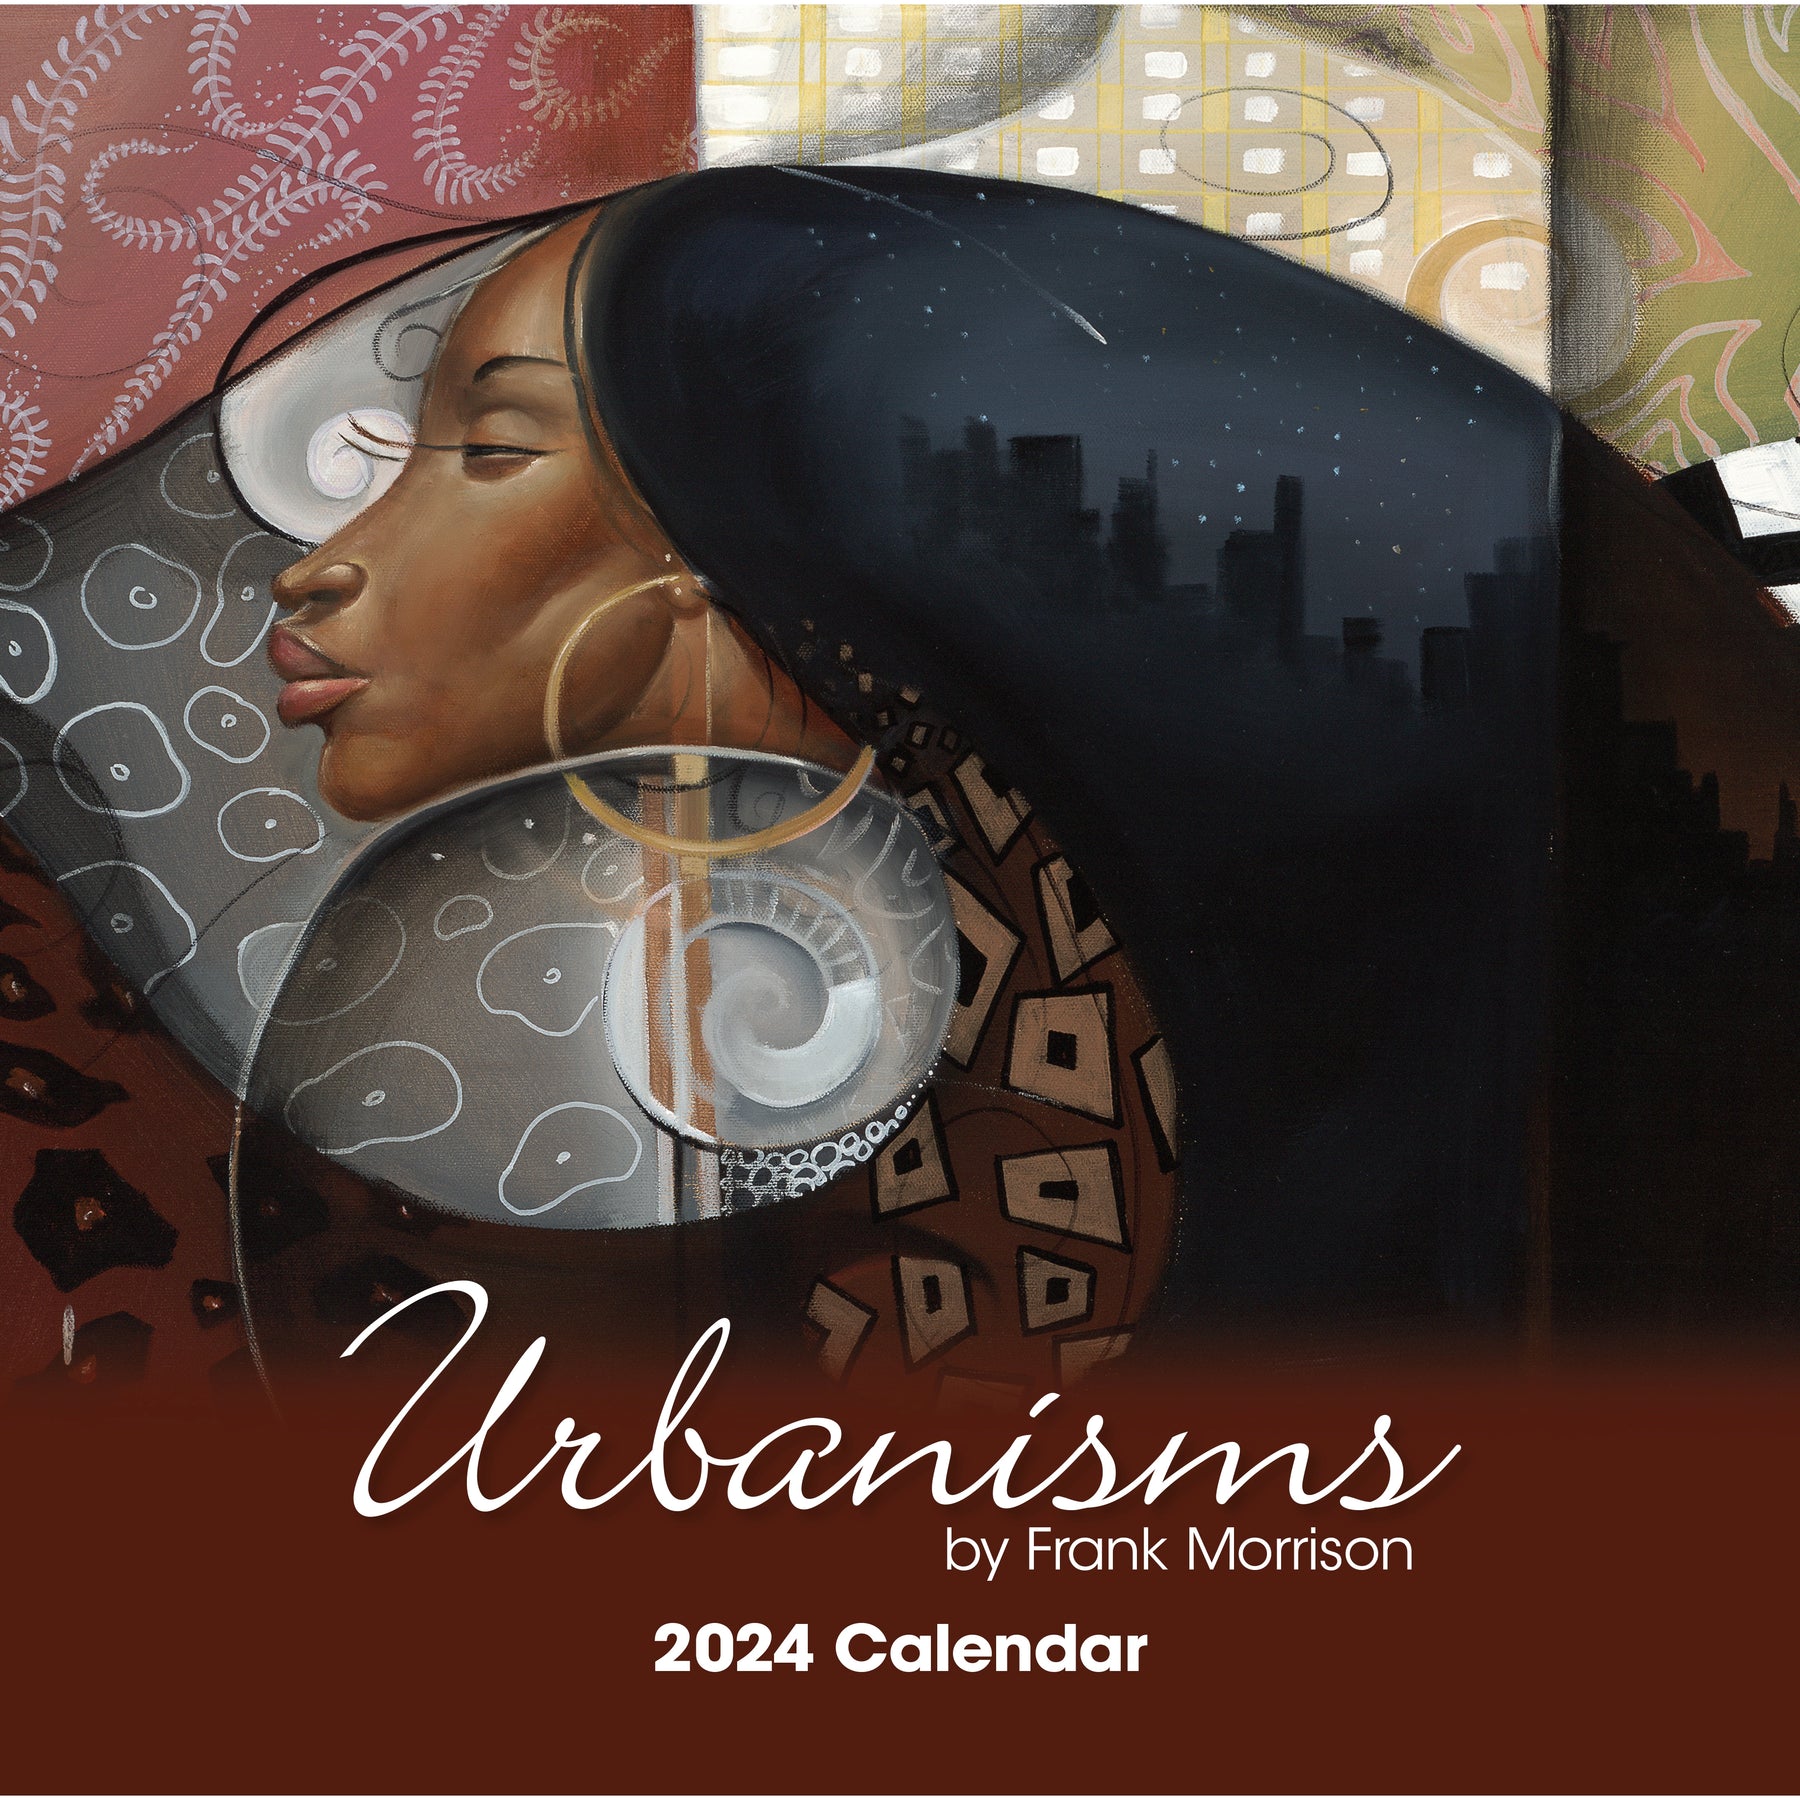 1 of 6: Urbanisms: The Art of Frank Morrison 2024 African American Wall Calendar